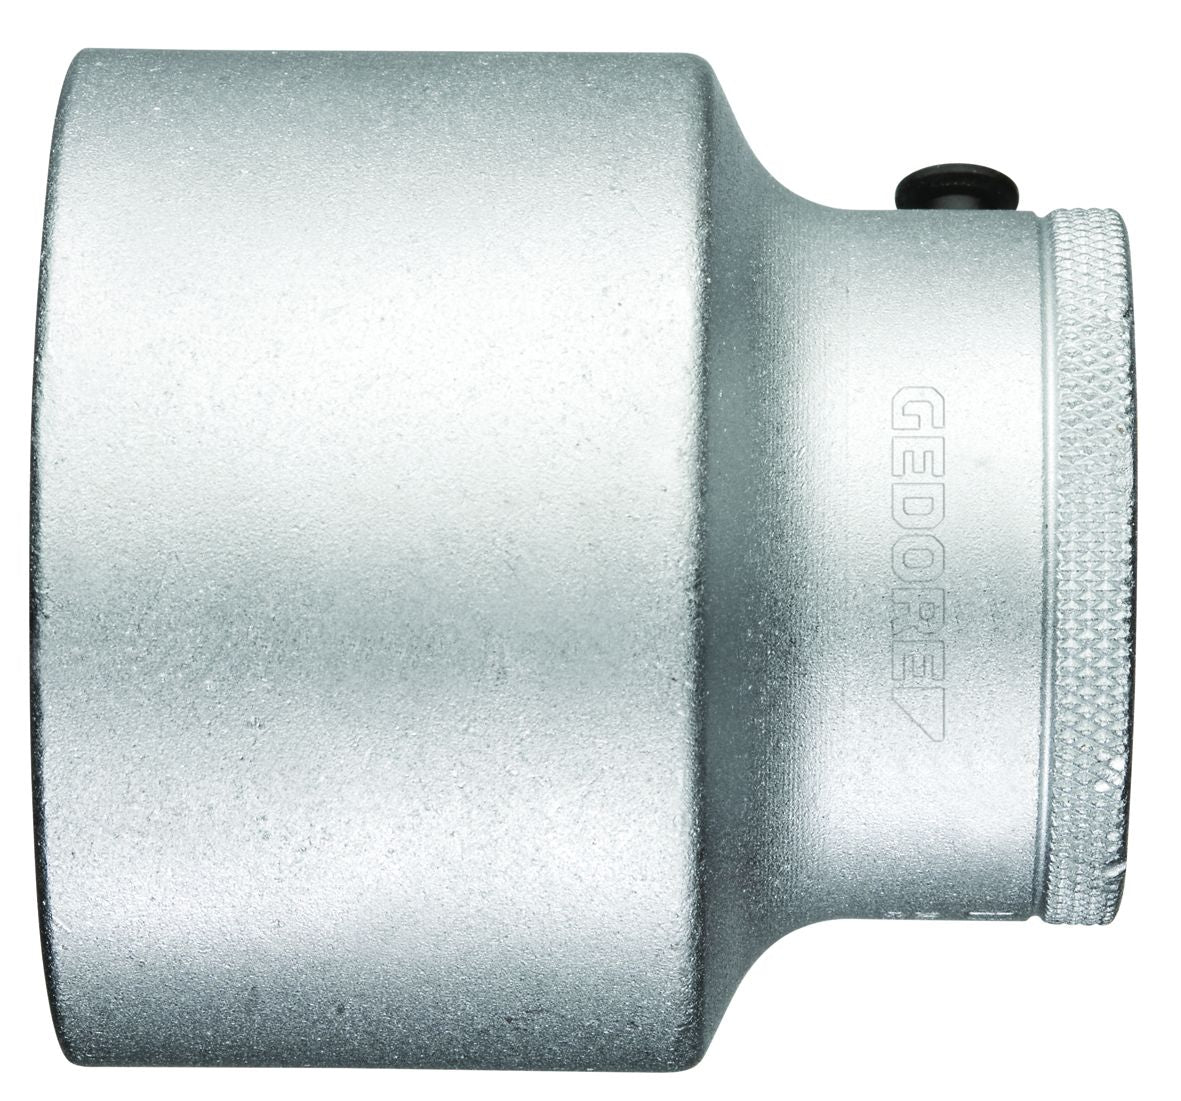 GEDORE D 32 21 - Unit Drive Socket 3/4", 21 mm (6289800)